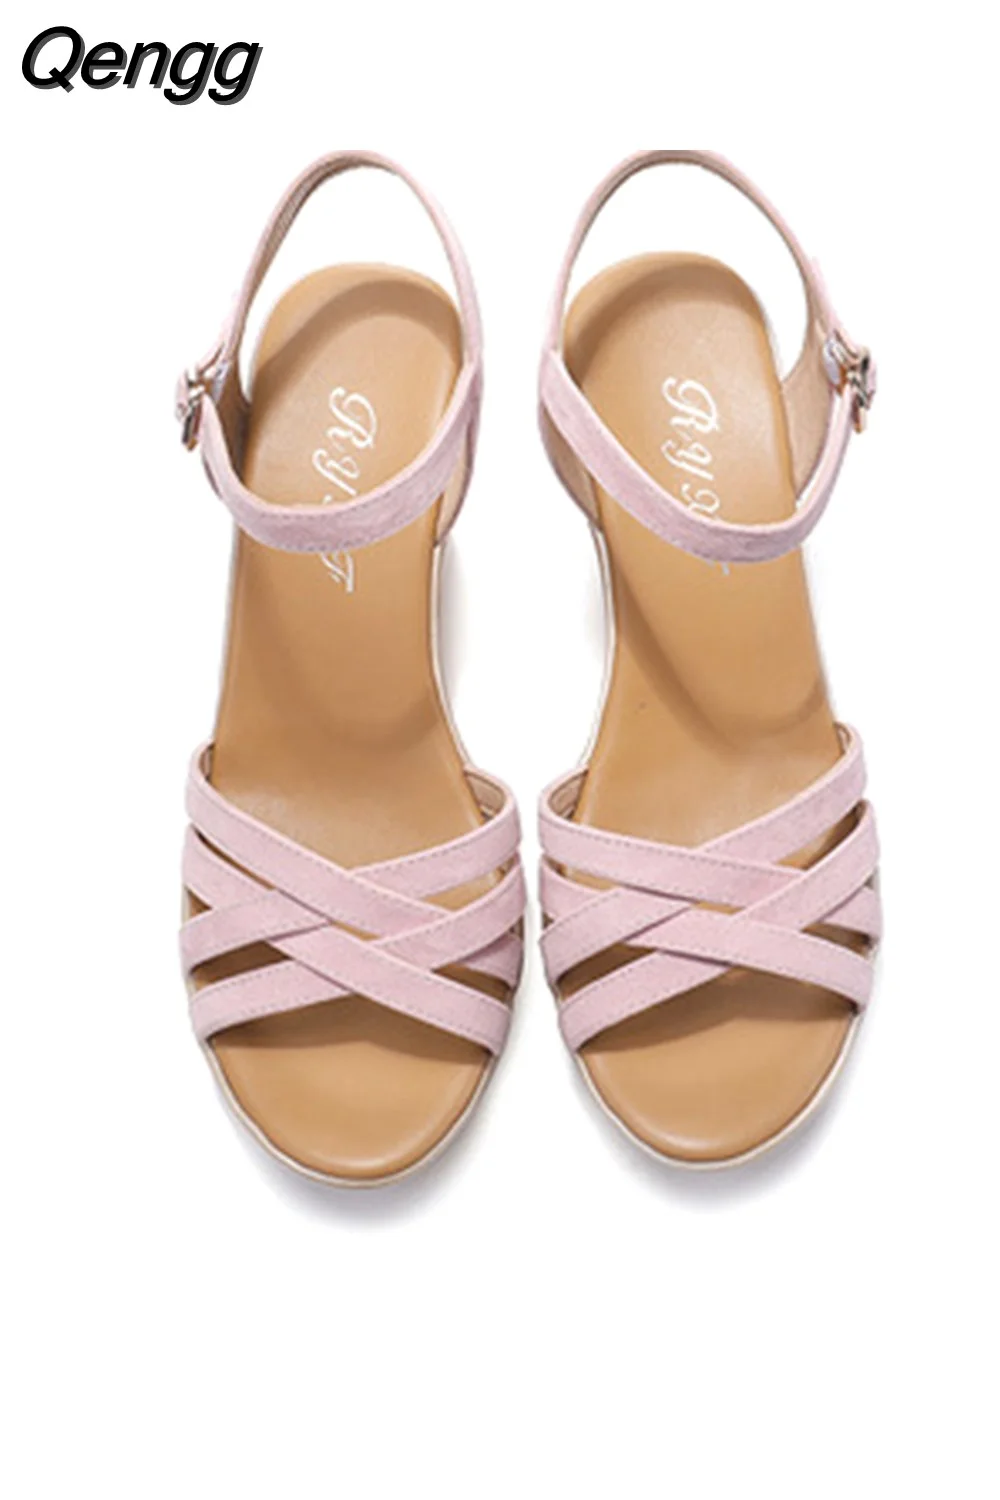 Qengg Fashion Peep Toe Women'S Heel Summer Shoes Female Wedge Heel Woman Sandals Platform Size 33 34 35 36 37 38 39 40 41 42